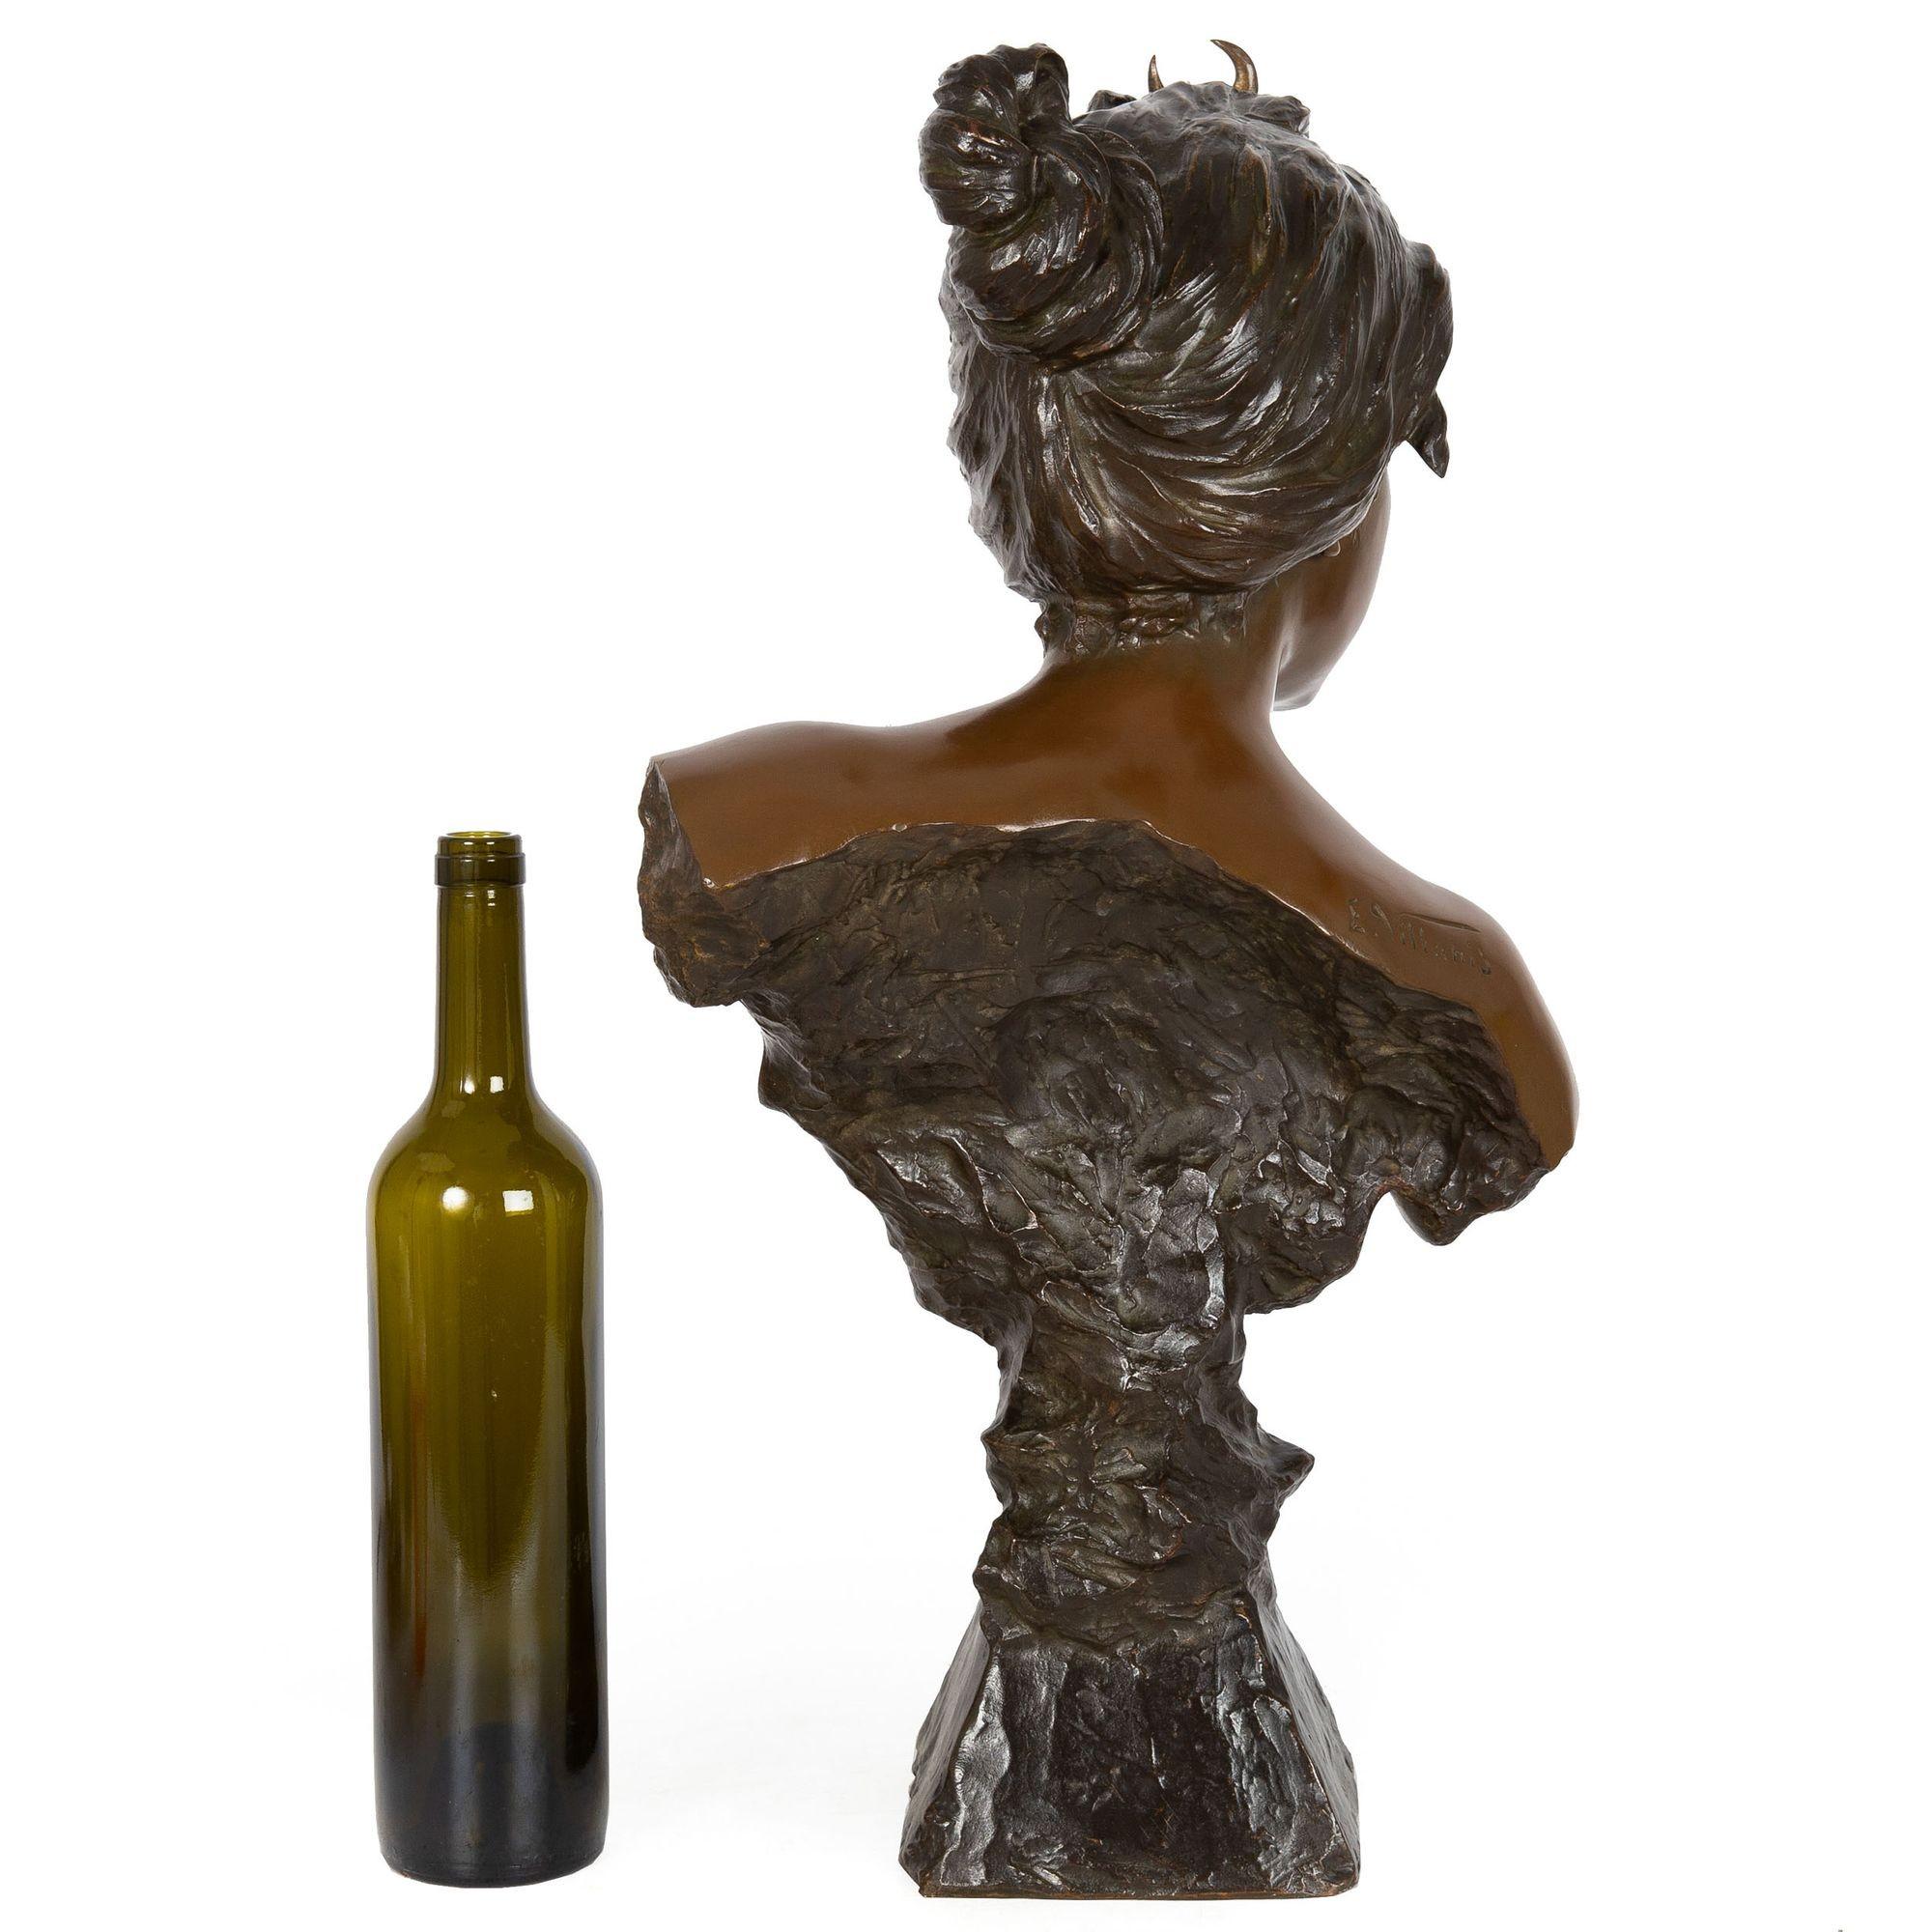 20th Century French Art Nouveau Bronze Sculpture “Bust of Diana” by Emmanuel Villanis For Sale